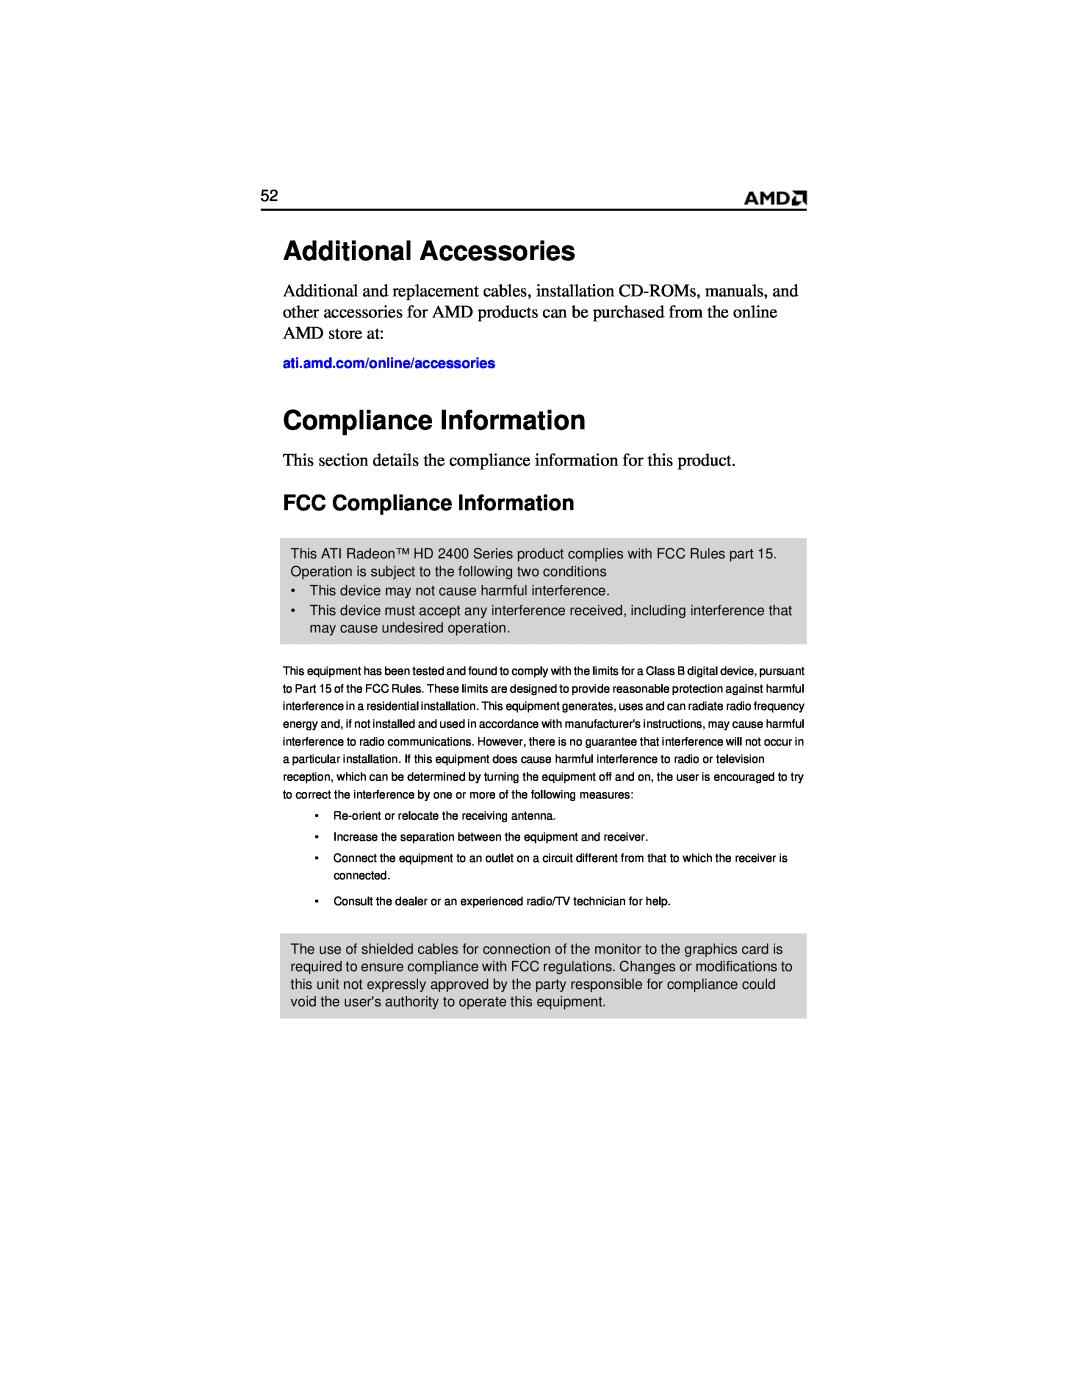 AMD HD 2400 manual Additional Accessories, FCC Compliance Information, ati.amd.com/online/accessories 